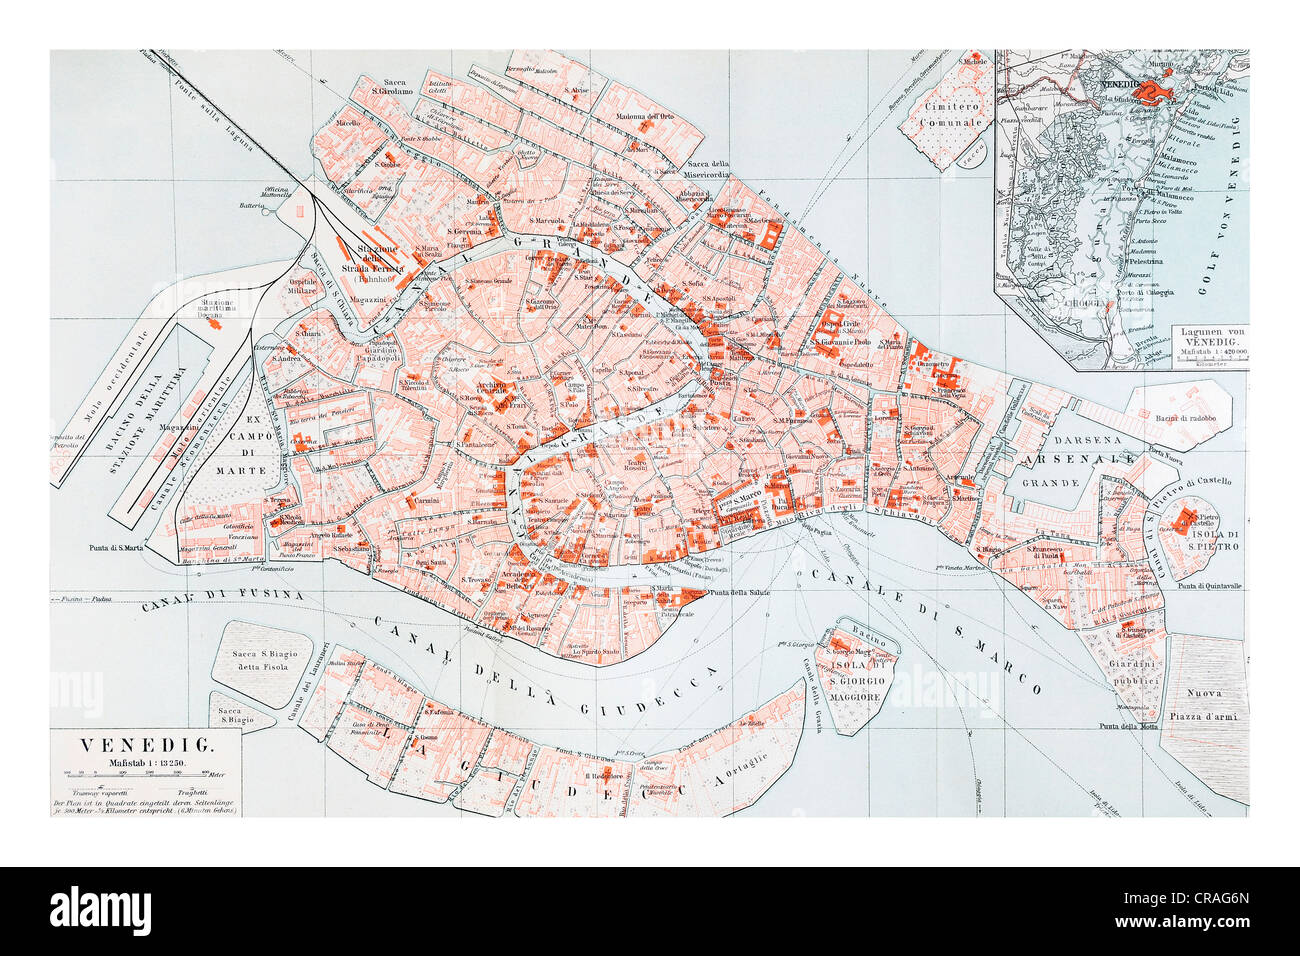 Map of Venice, from Meyers Konversationslexikon encyclopedia, 1897 Stock Photo